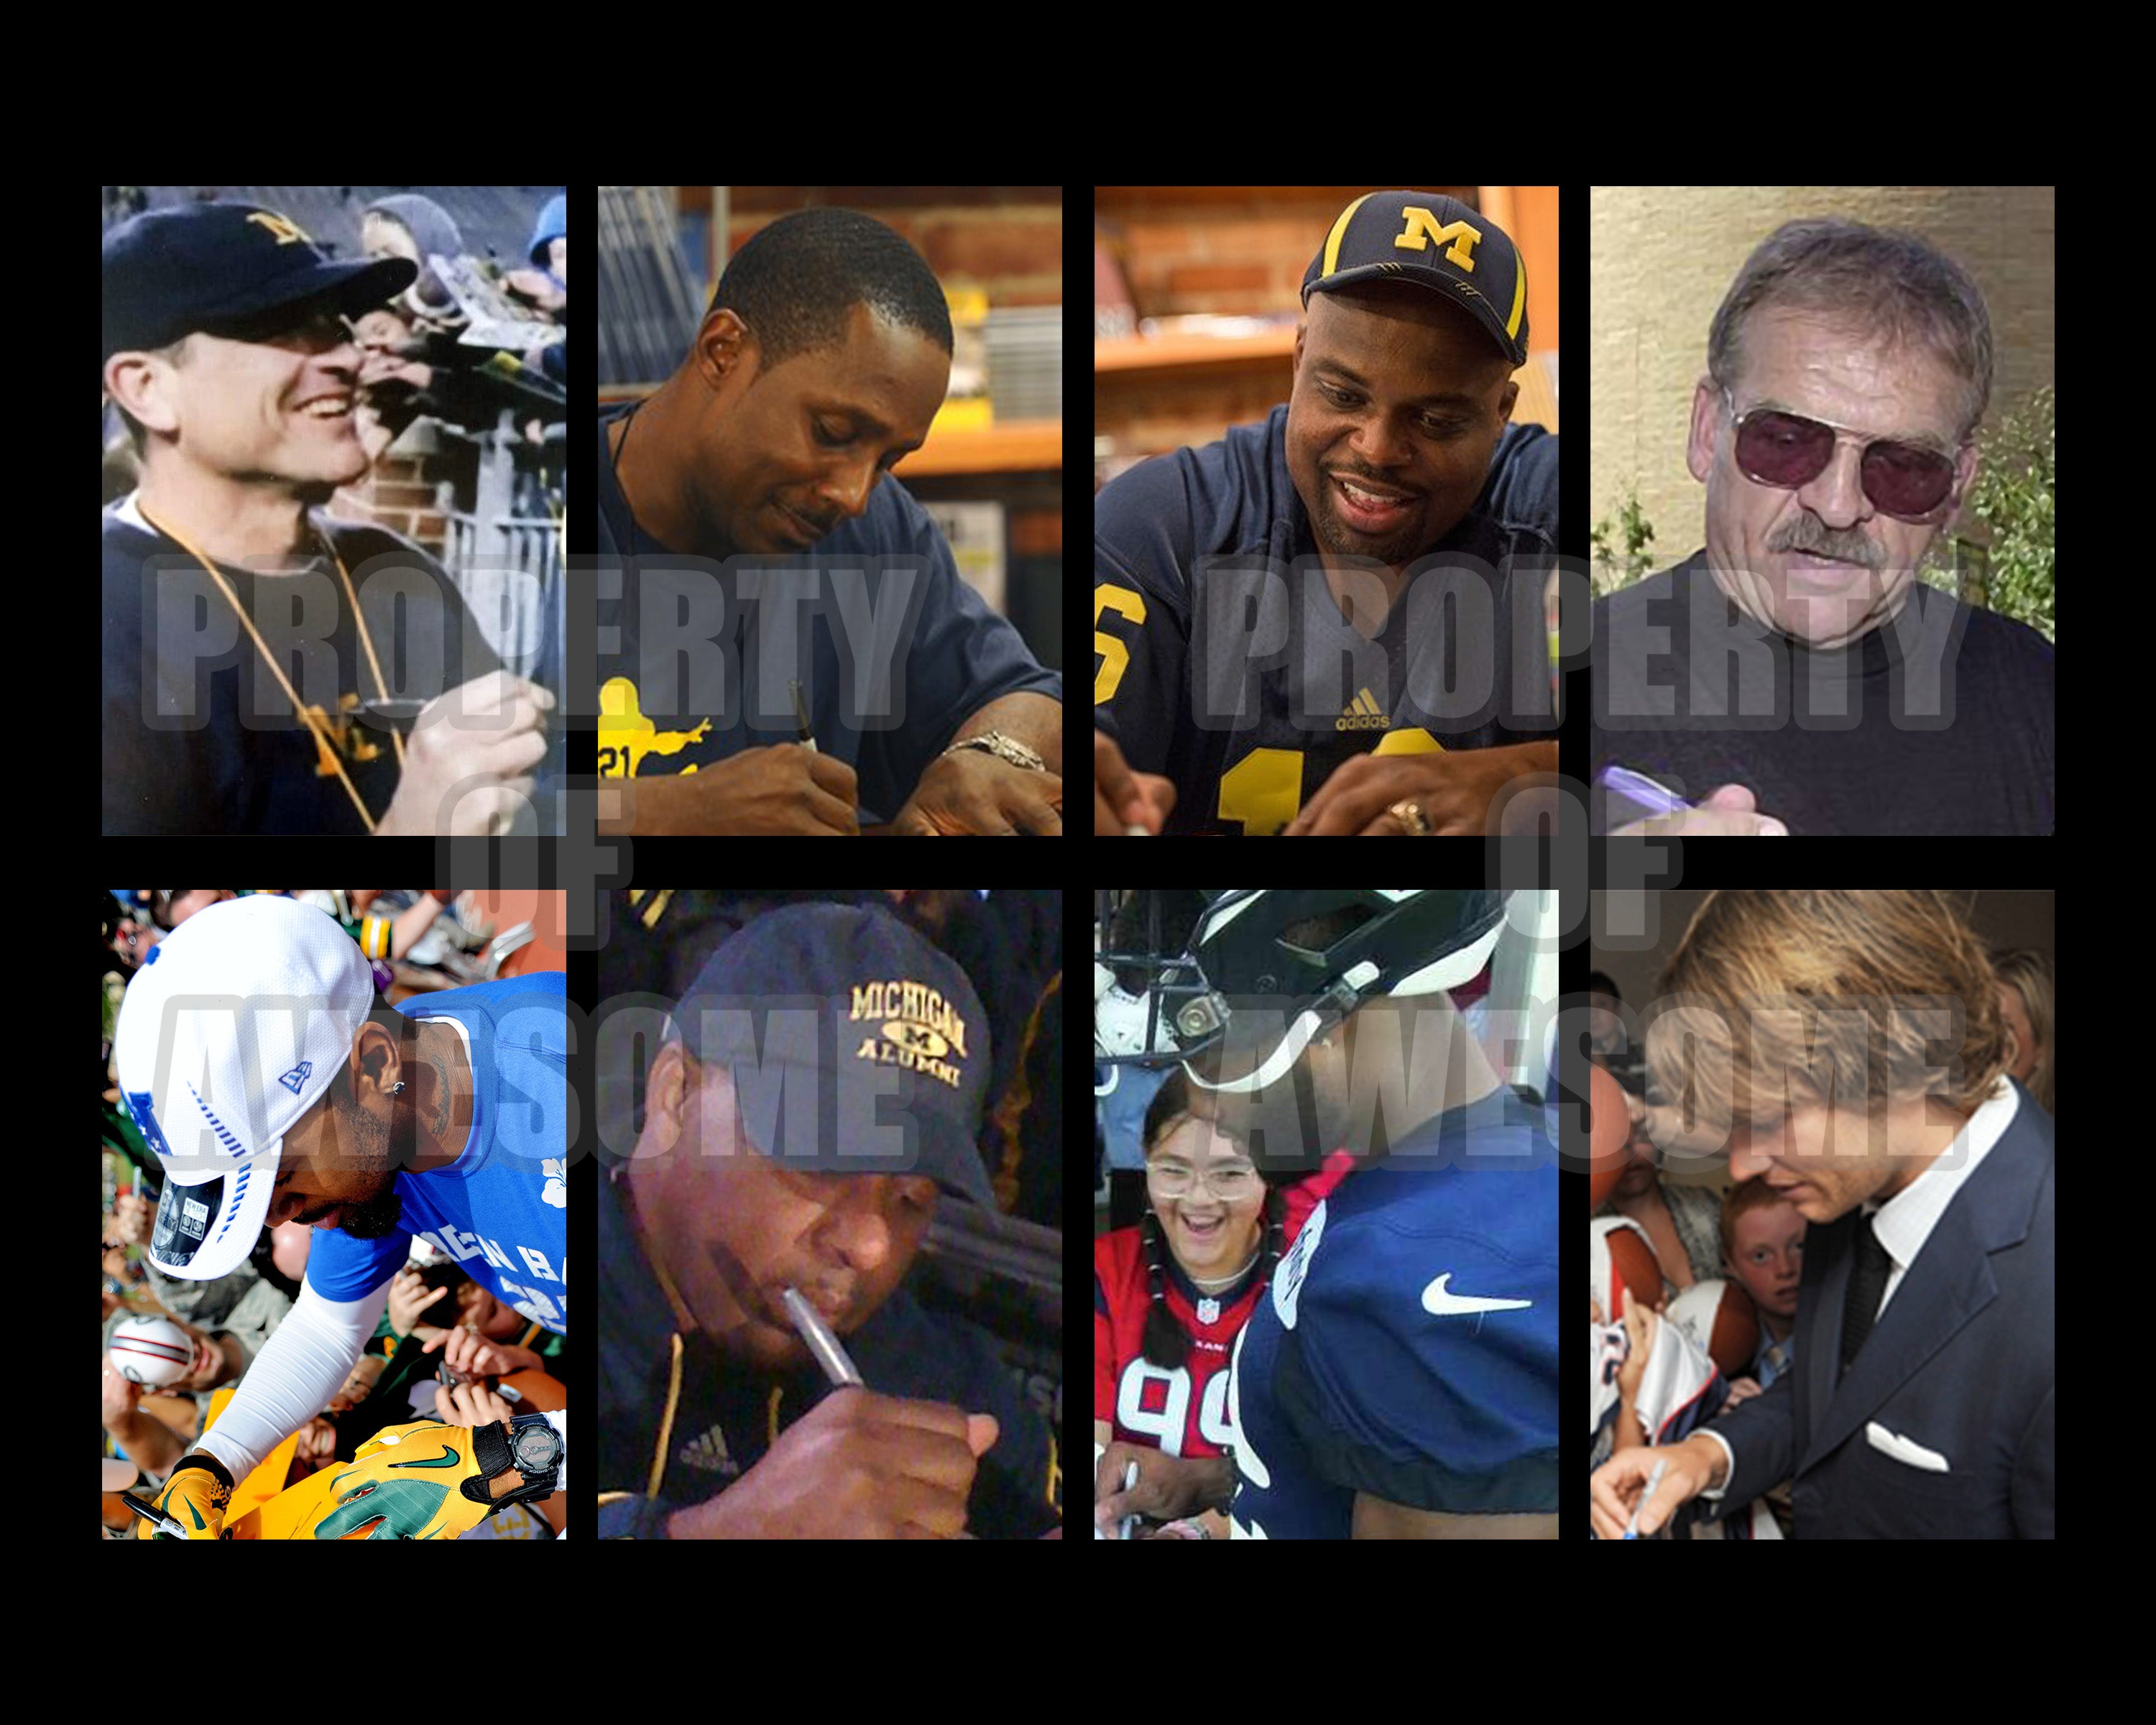 Michigan Wolverines Michigan Legends Tom Brady, Charles Woodson, Desmond Howard, Jim Harbaugh signed helmet with proof free case